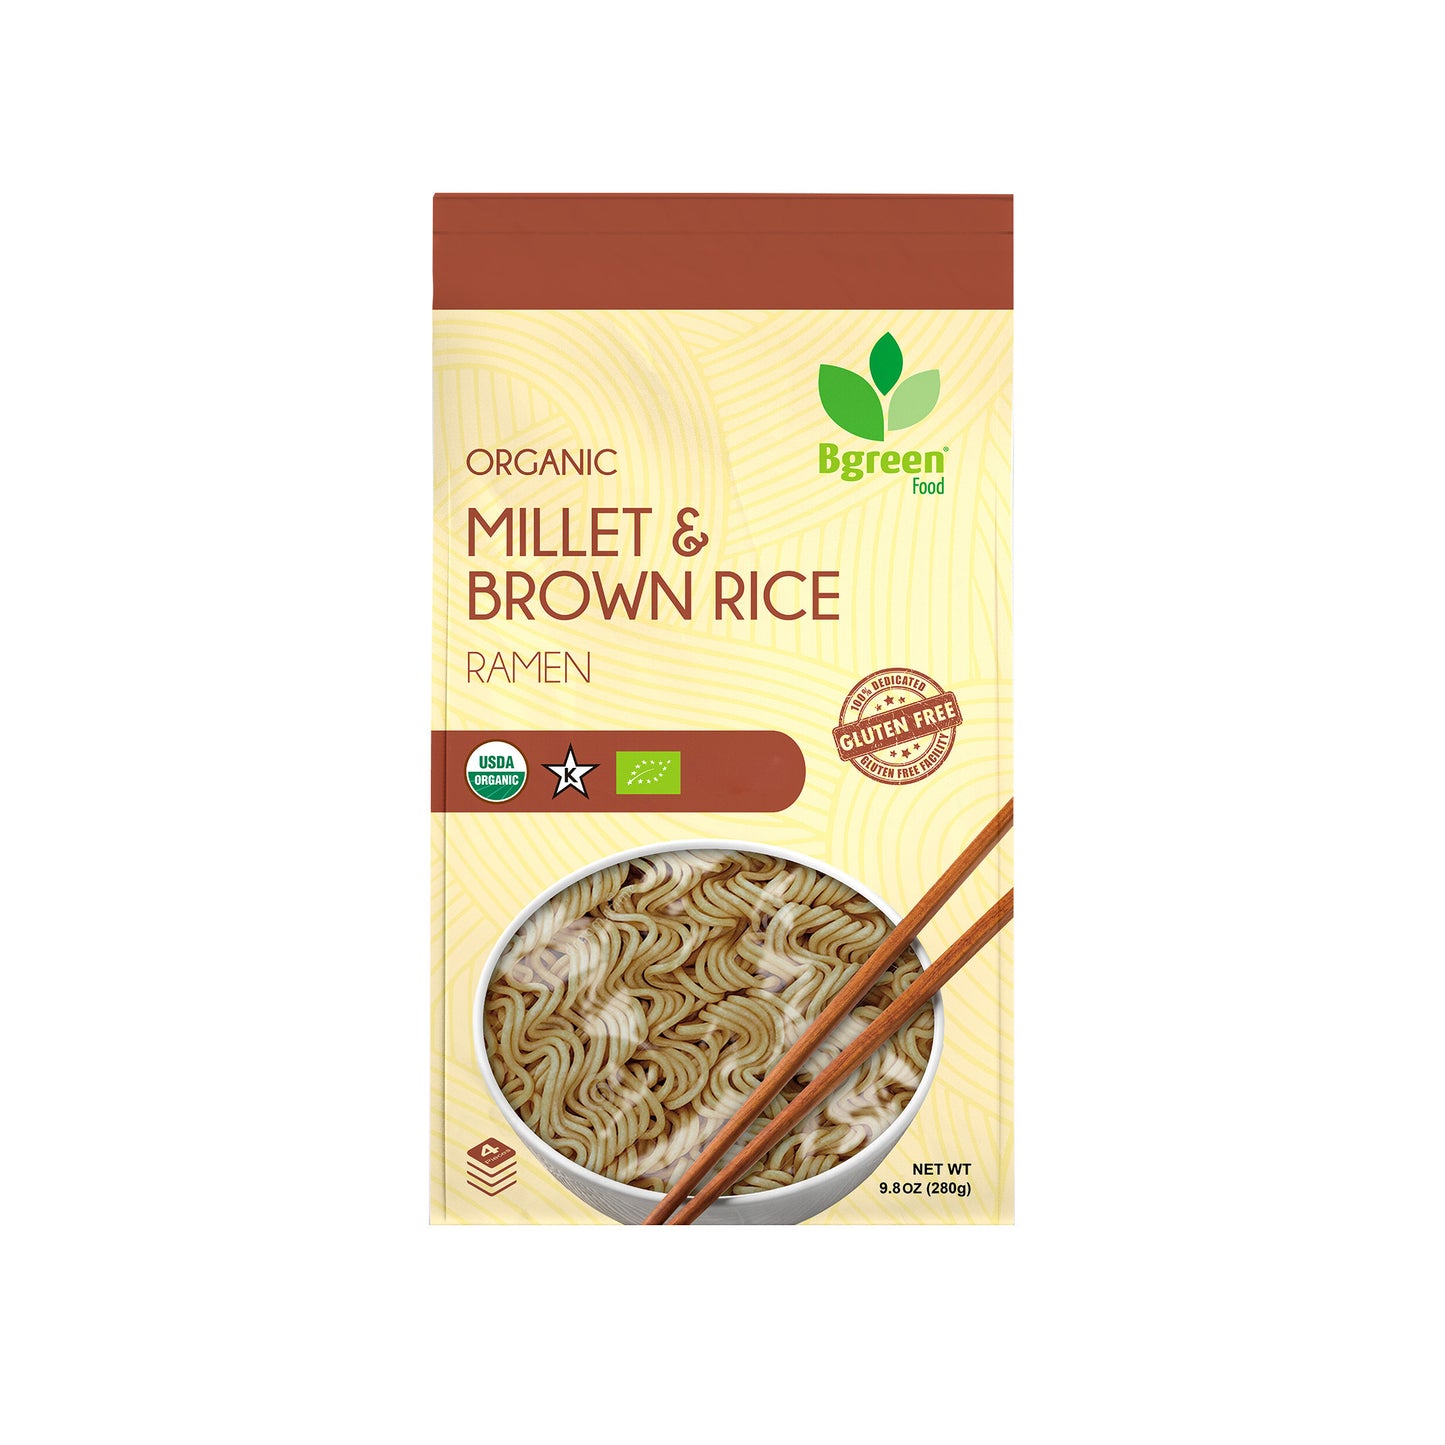 Bgreen Organic Millet & Brown Rice Ramen 有機小米拉麵